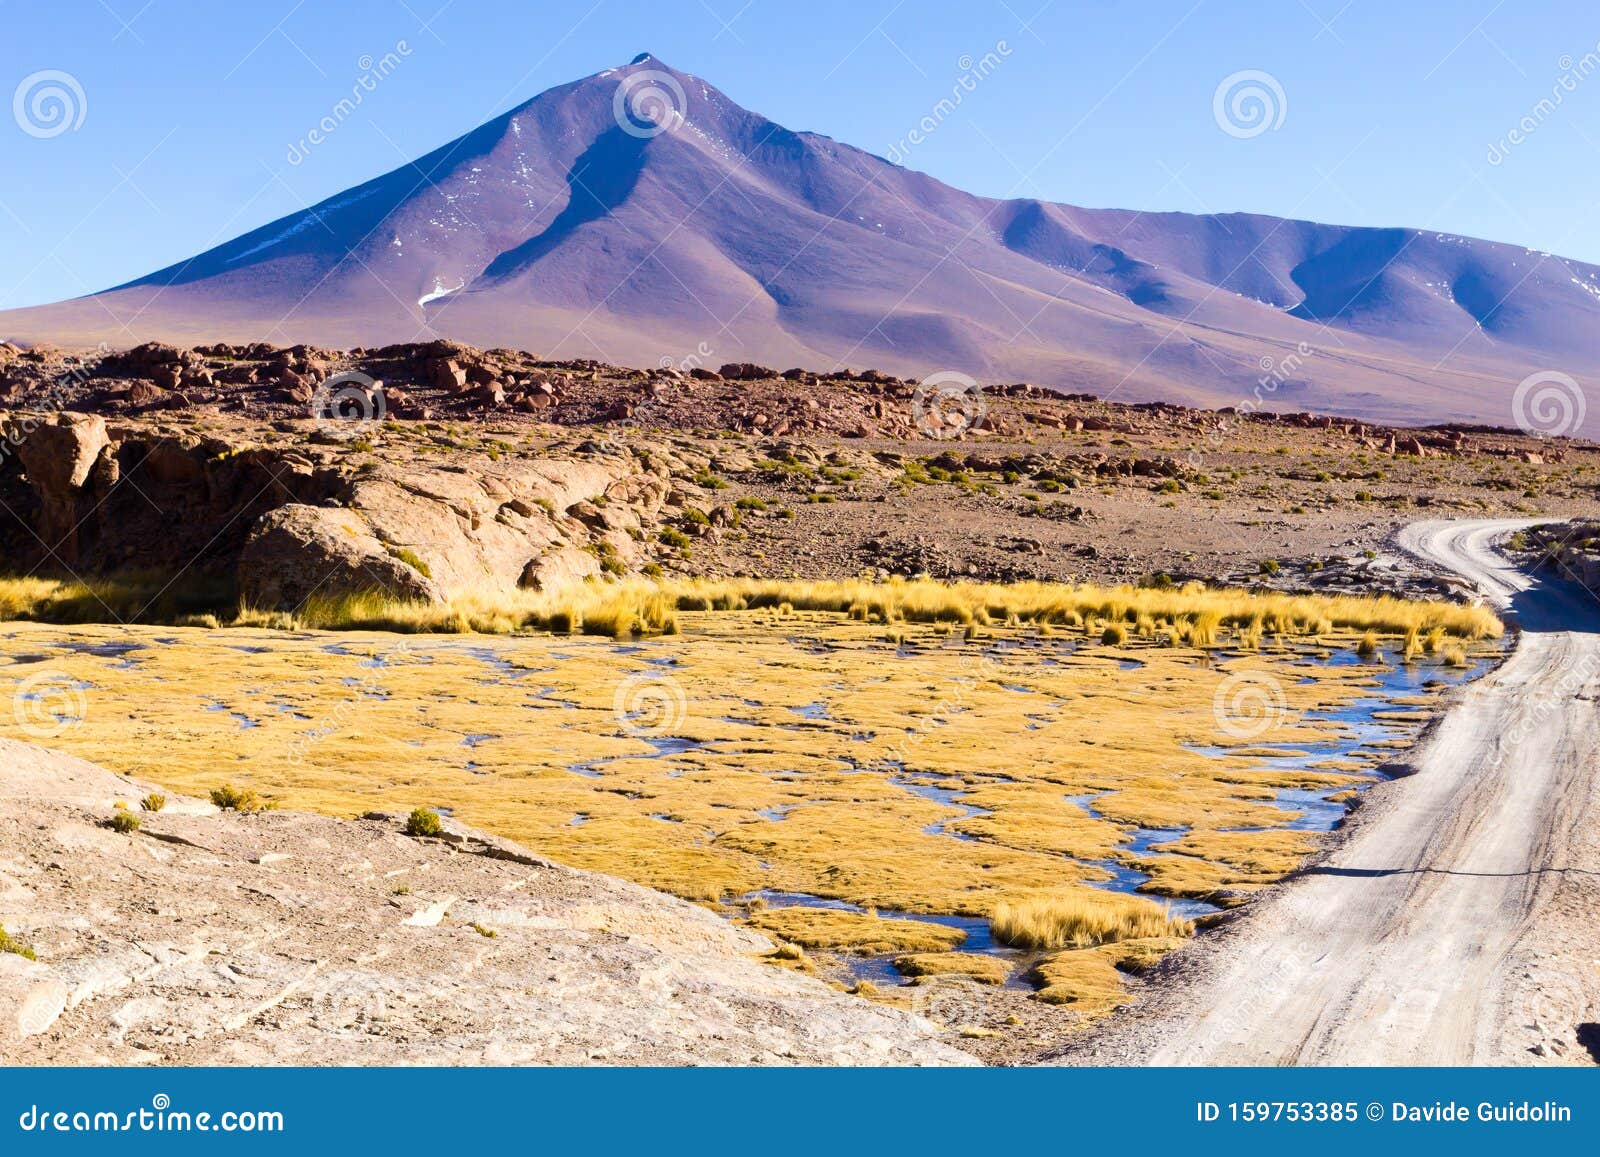 beautiful bolivian landscape,bolivia